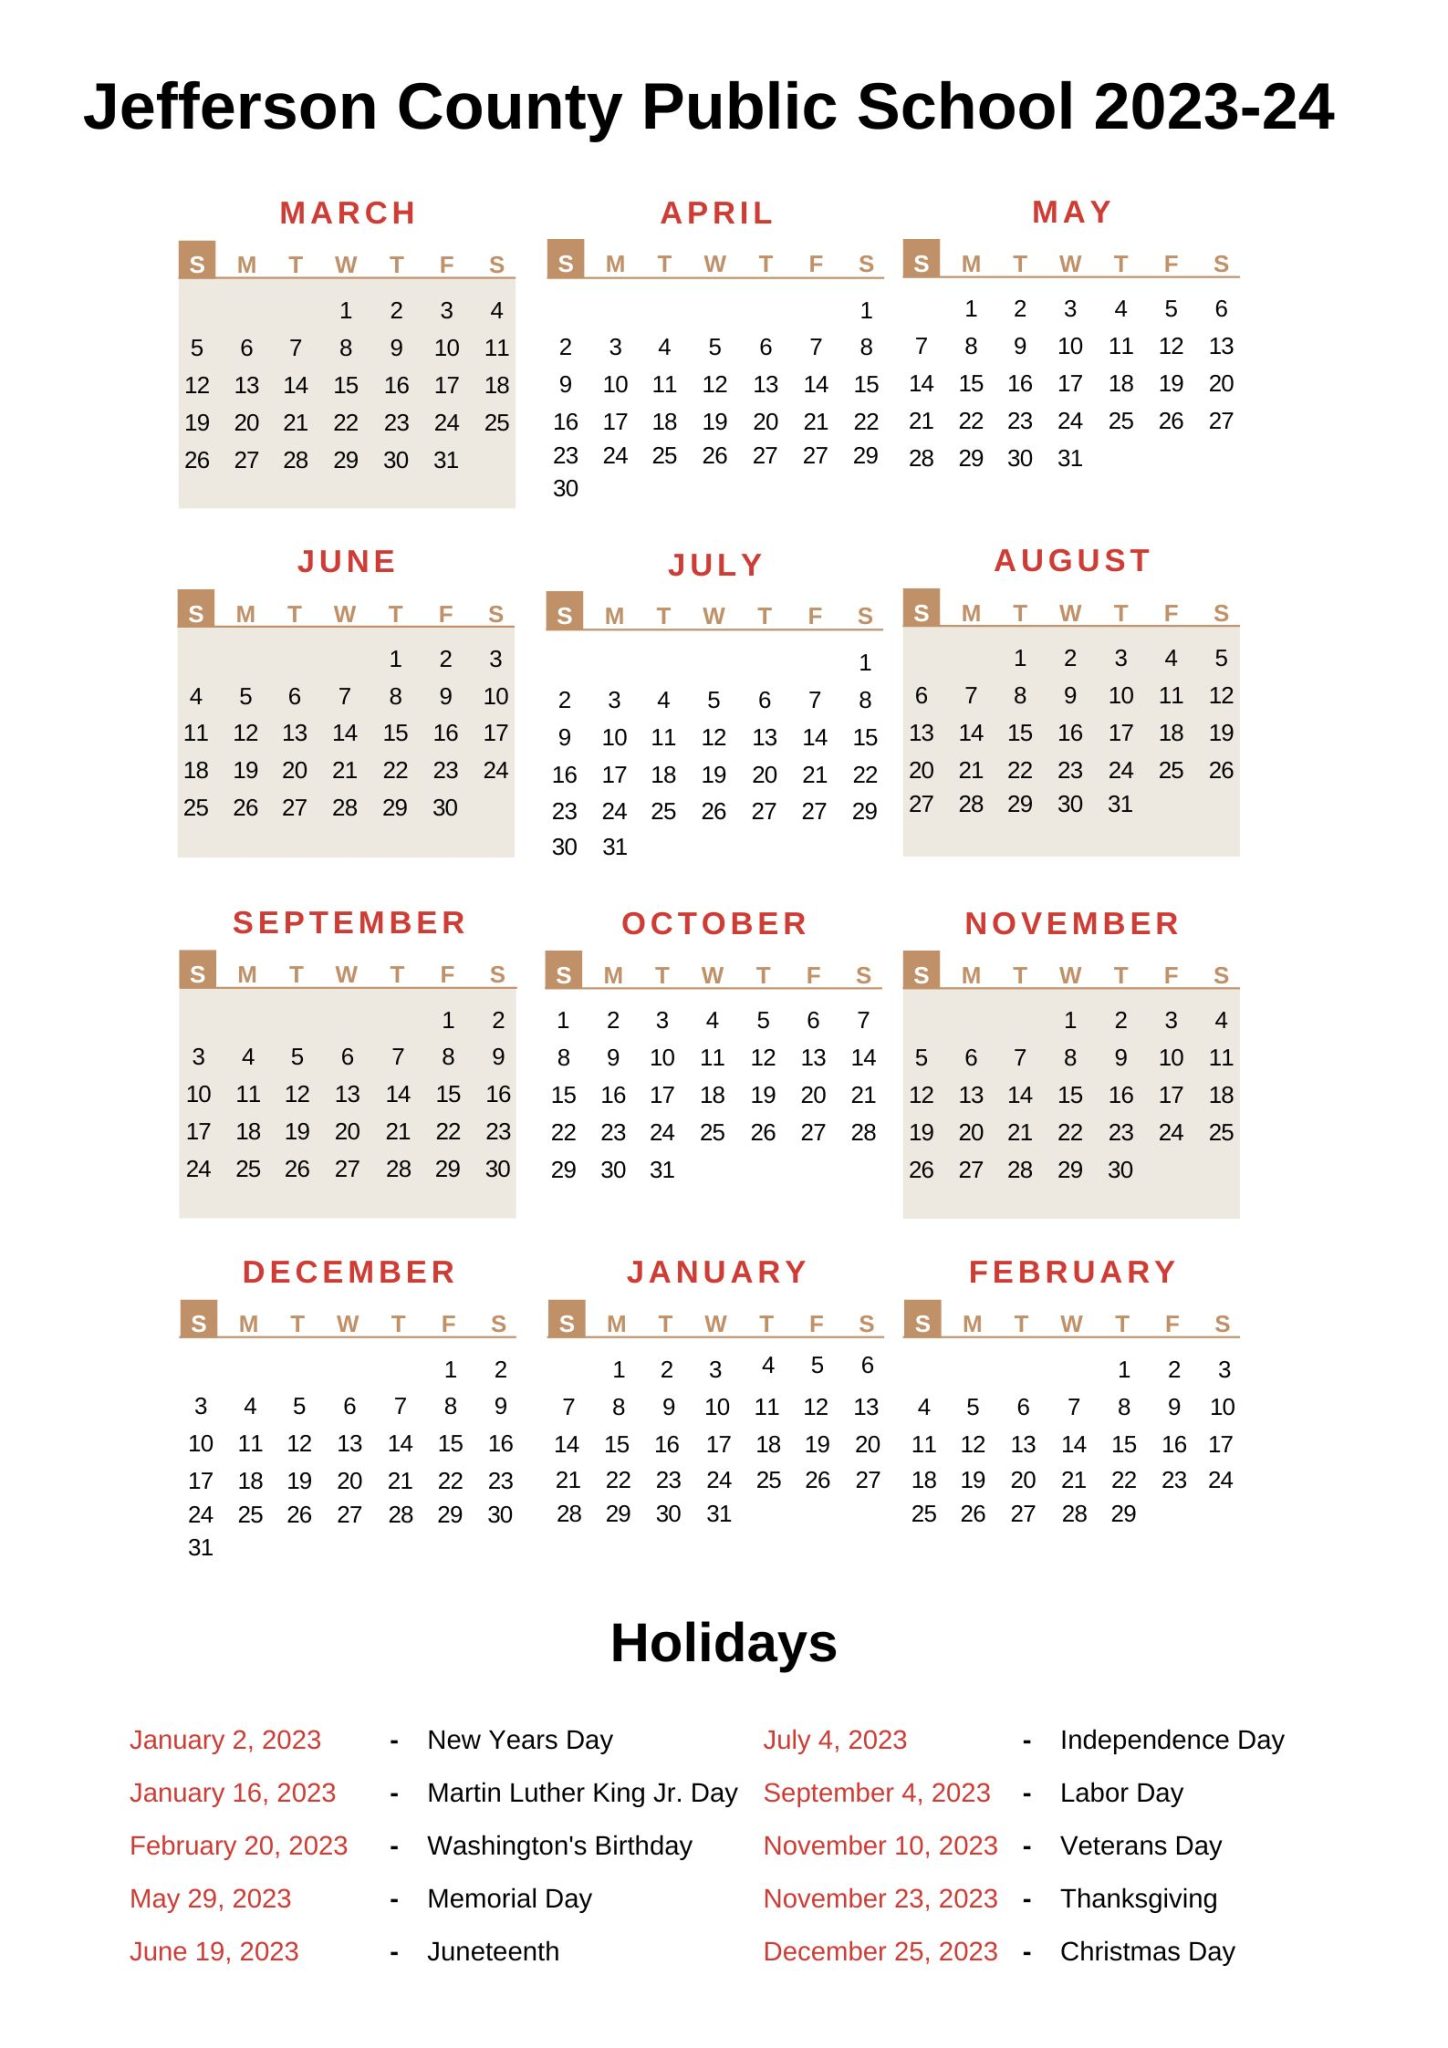 Jefferson County Public Schools Calendar 2023 24 with Holidays